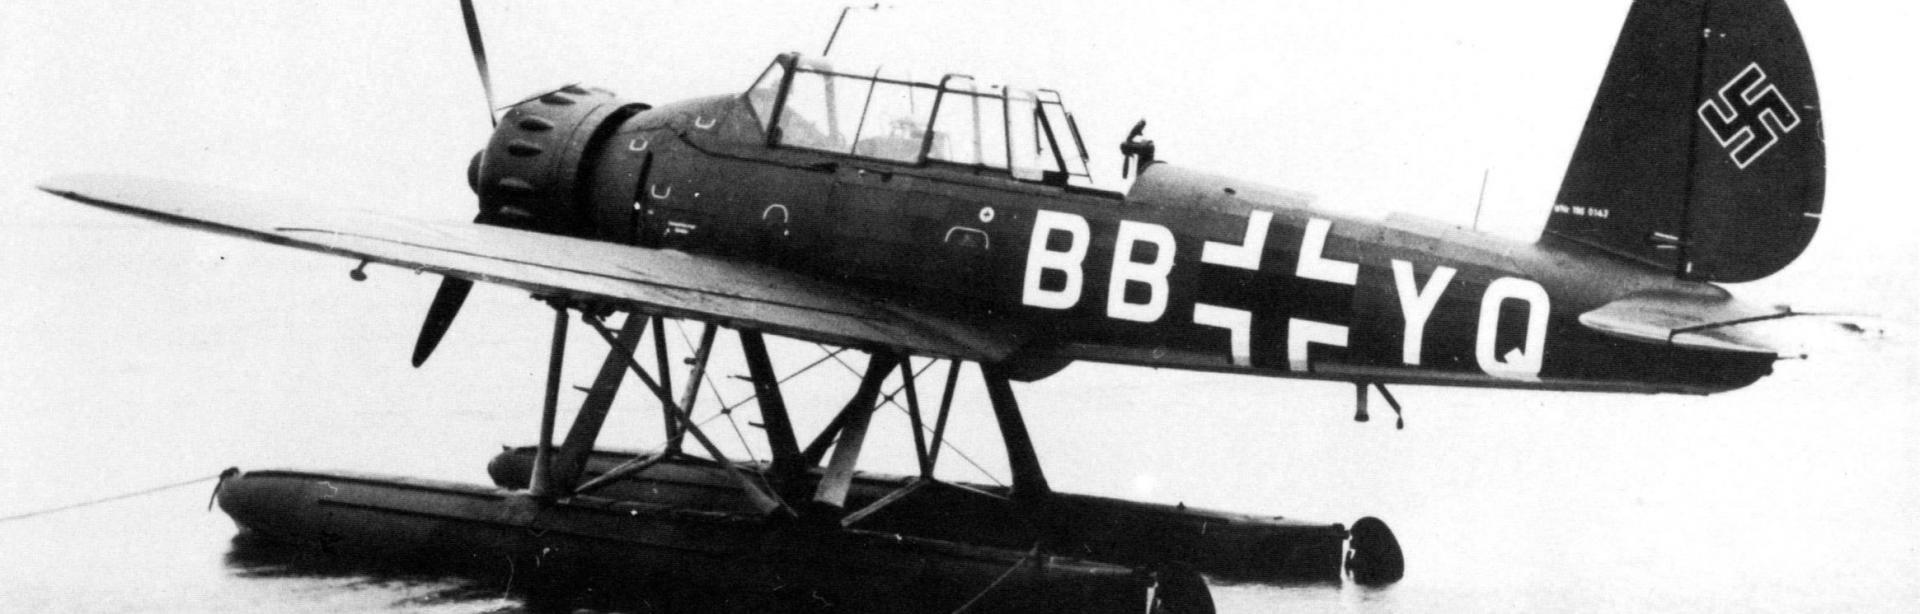 hydravions - seaplanes - WWII